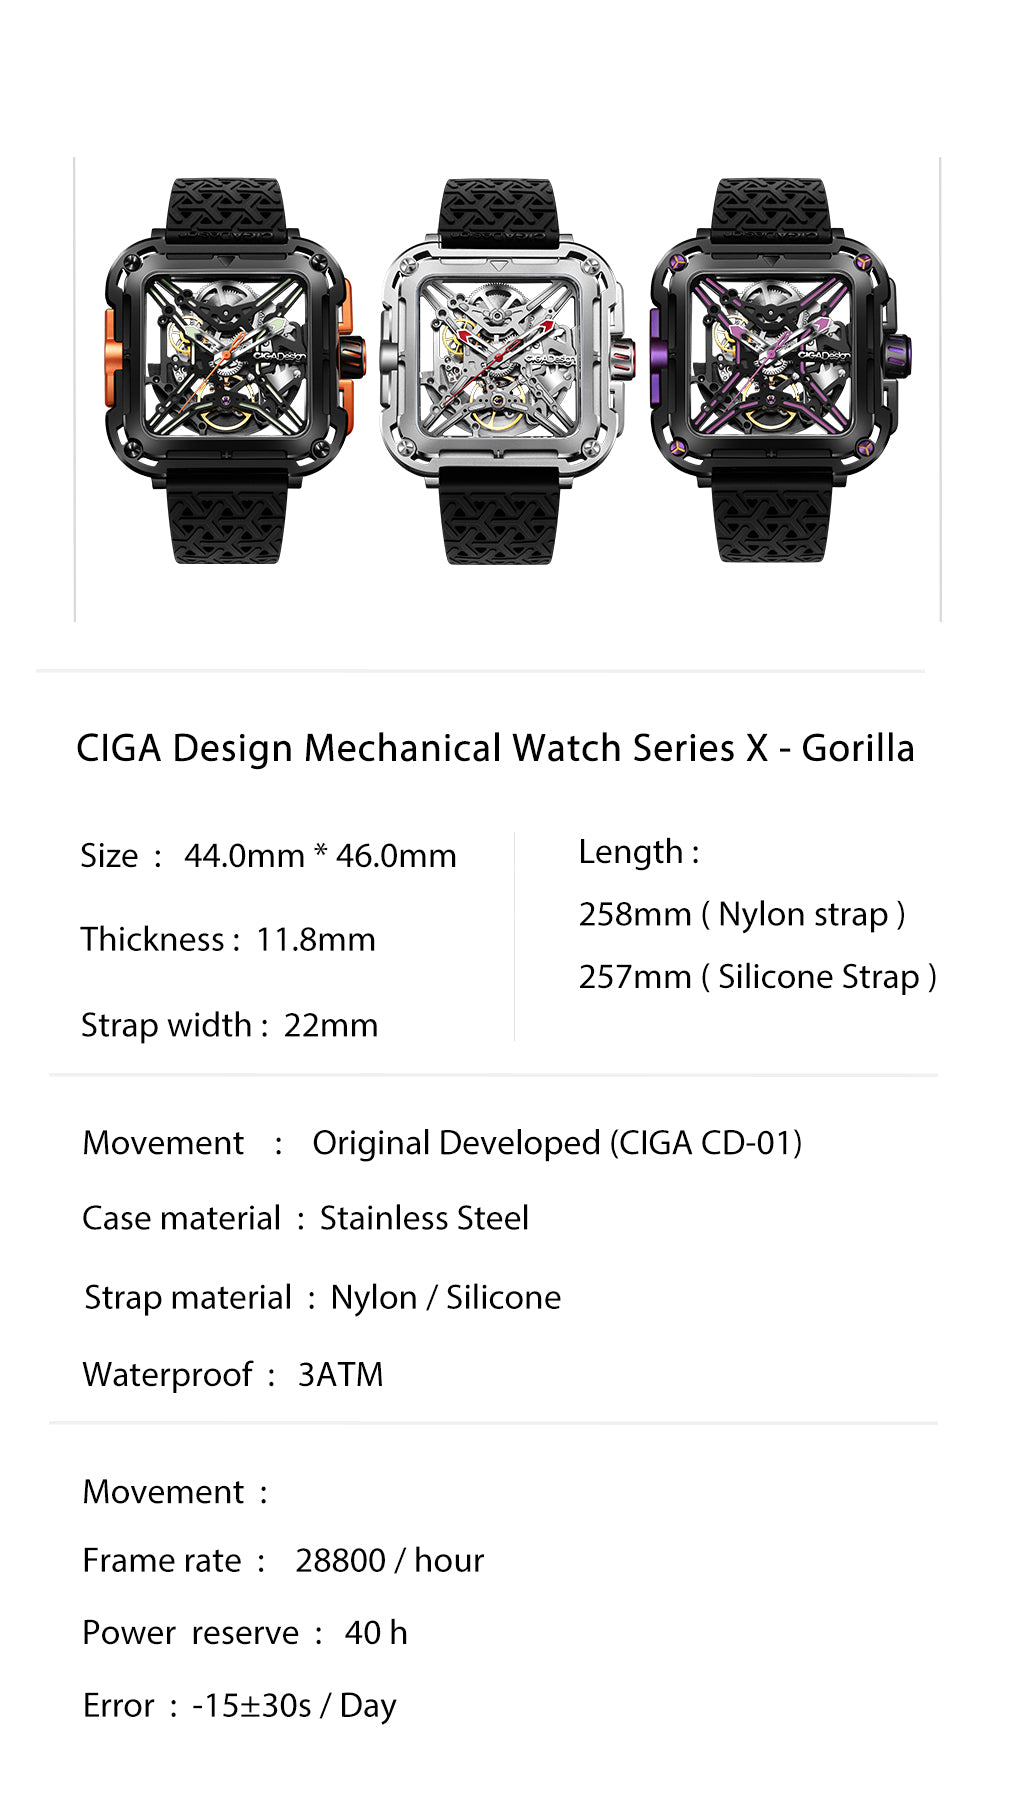 CIGA Design Mechanical Watch Series X Gorilla – cigadesign.official